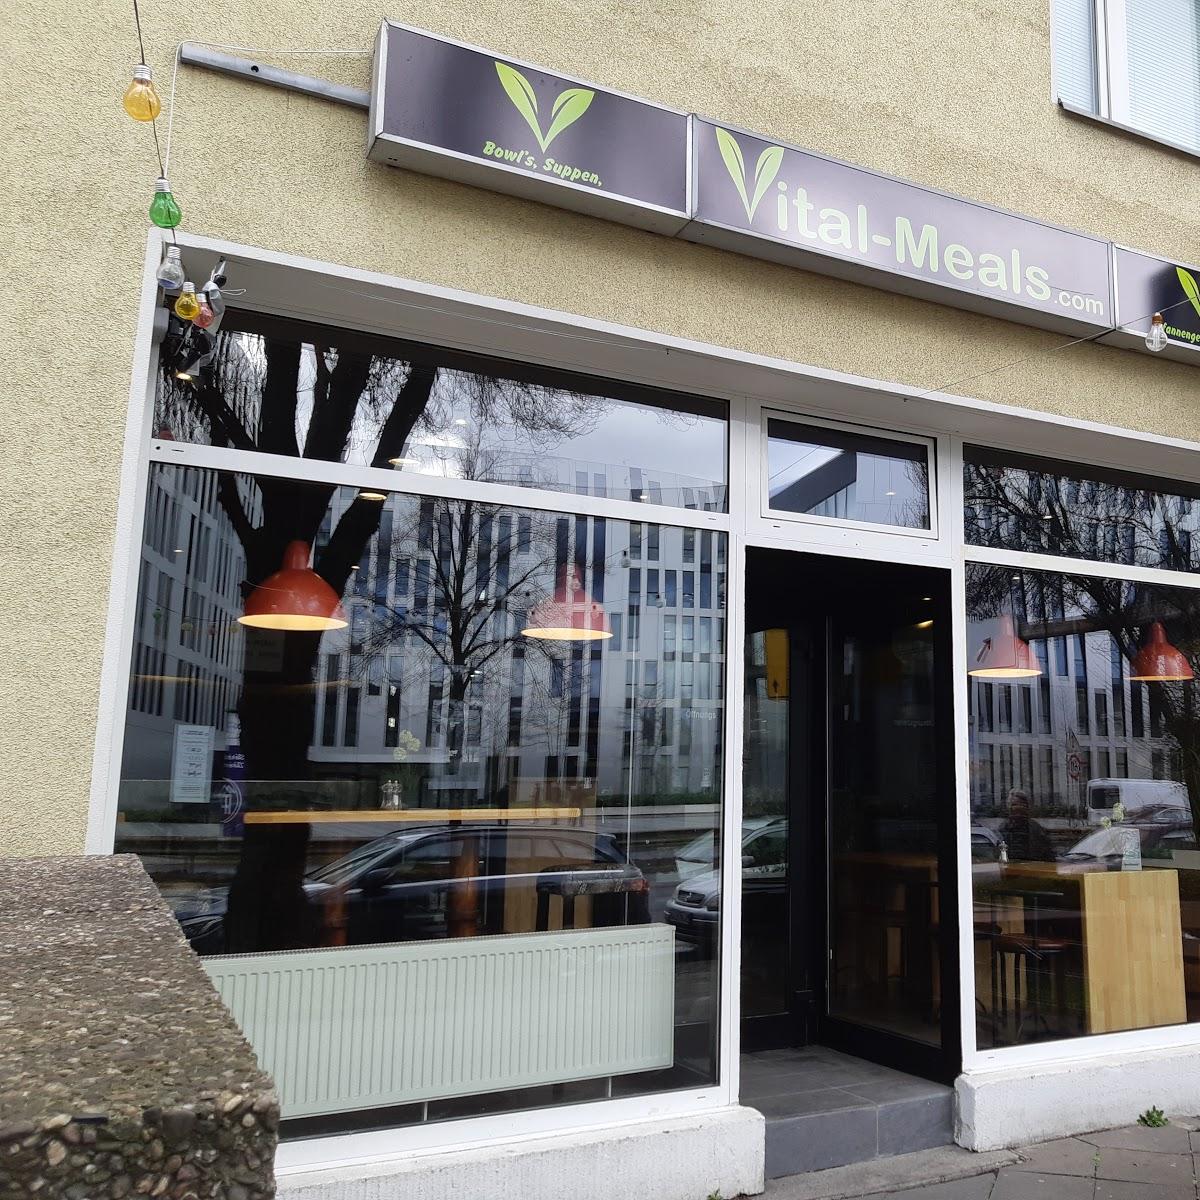 Restaurant "Vital-Meals" in Düsseldorf